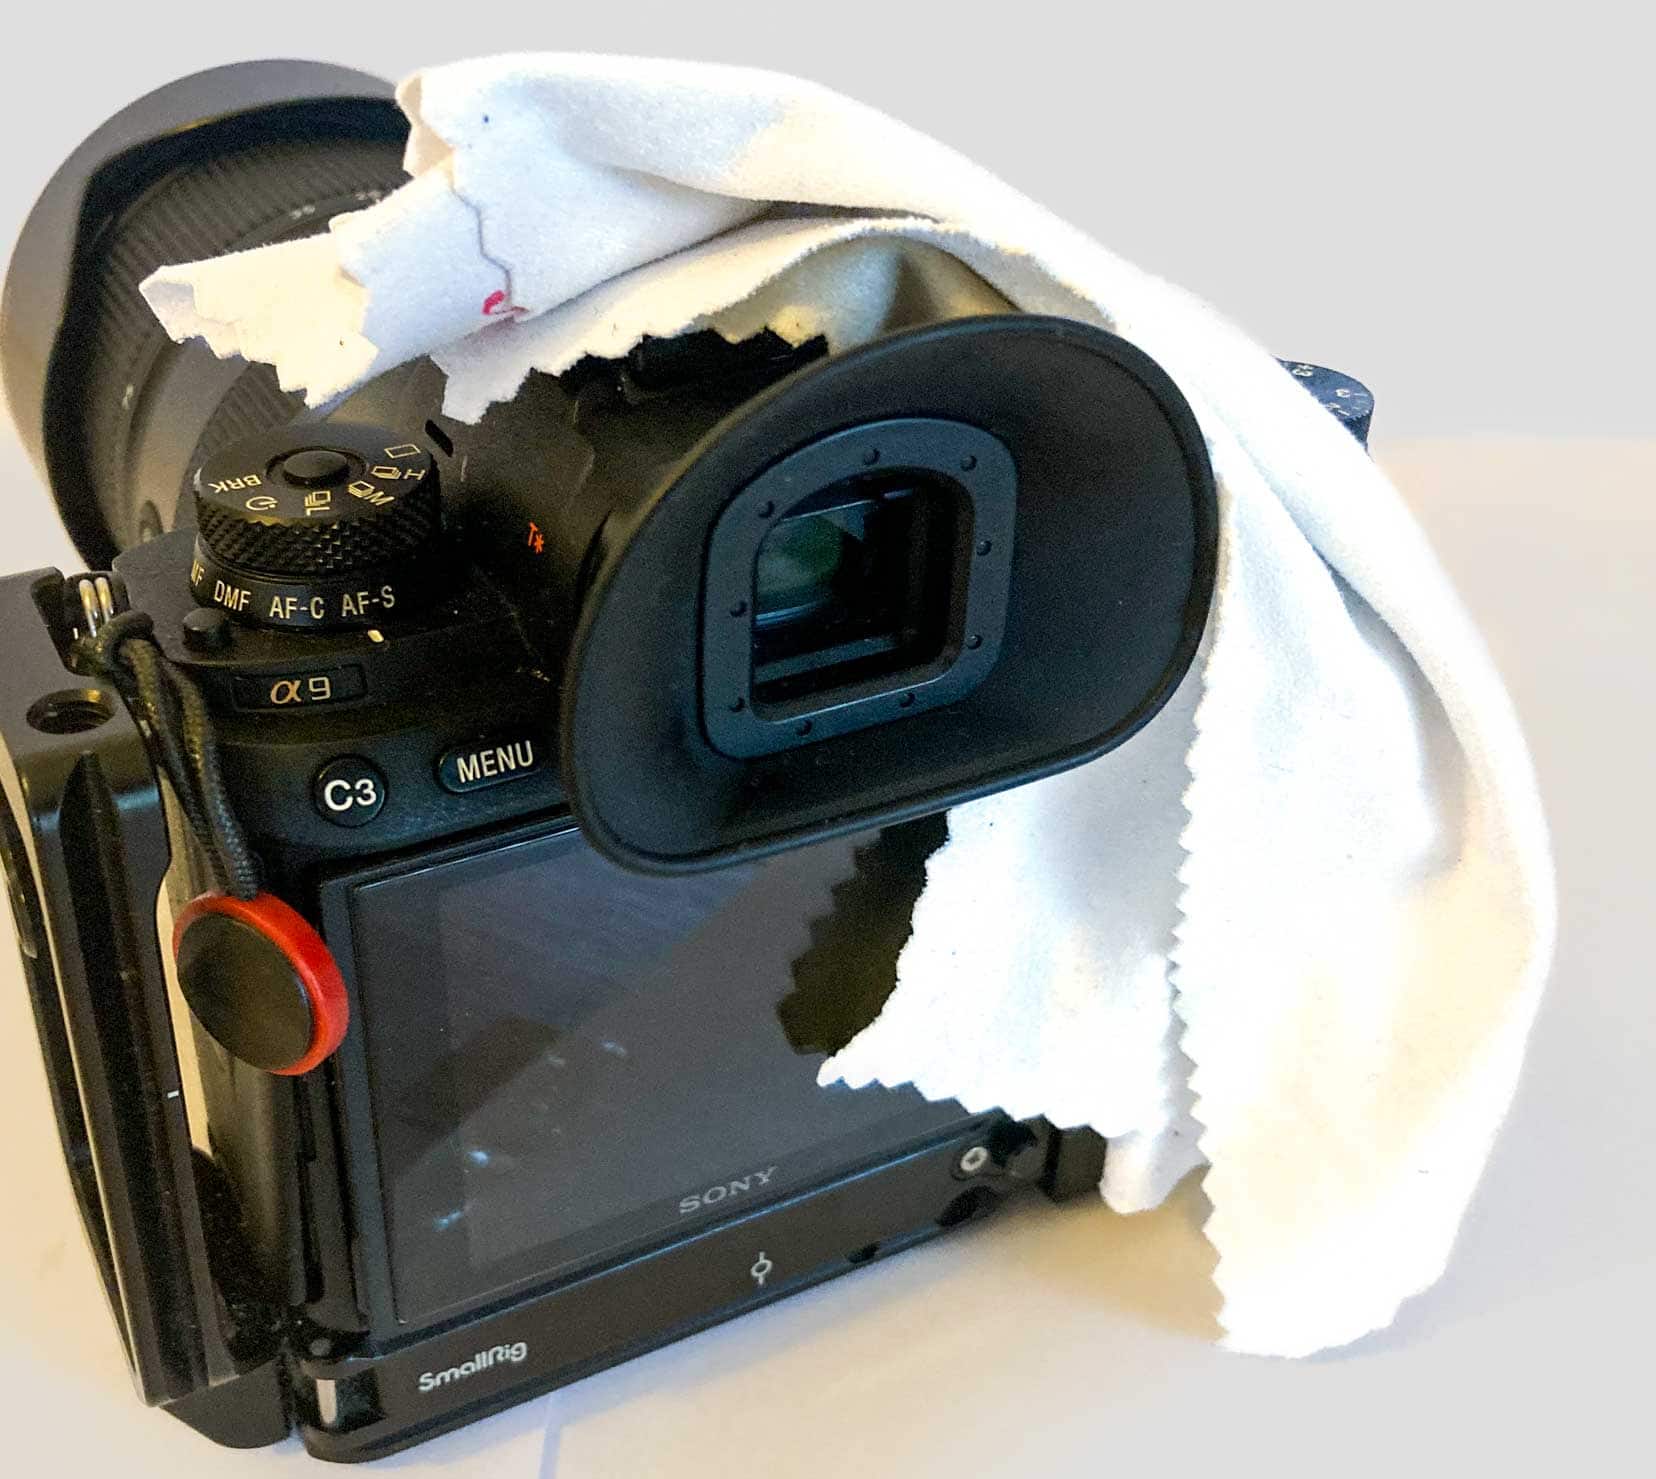 Microfibre-cloth on a camera